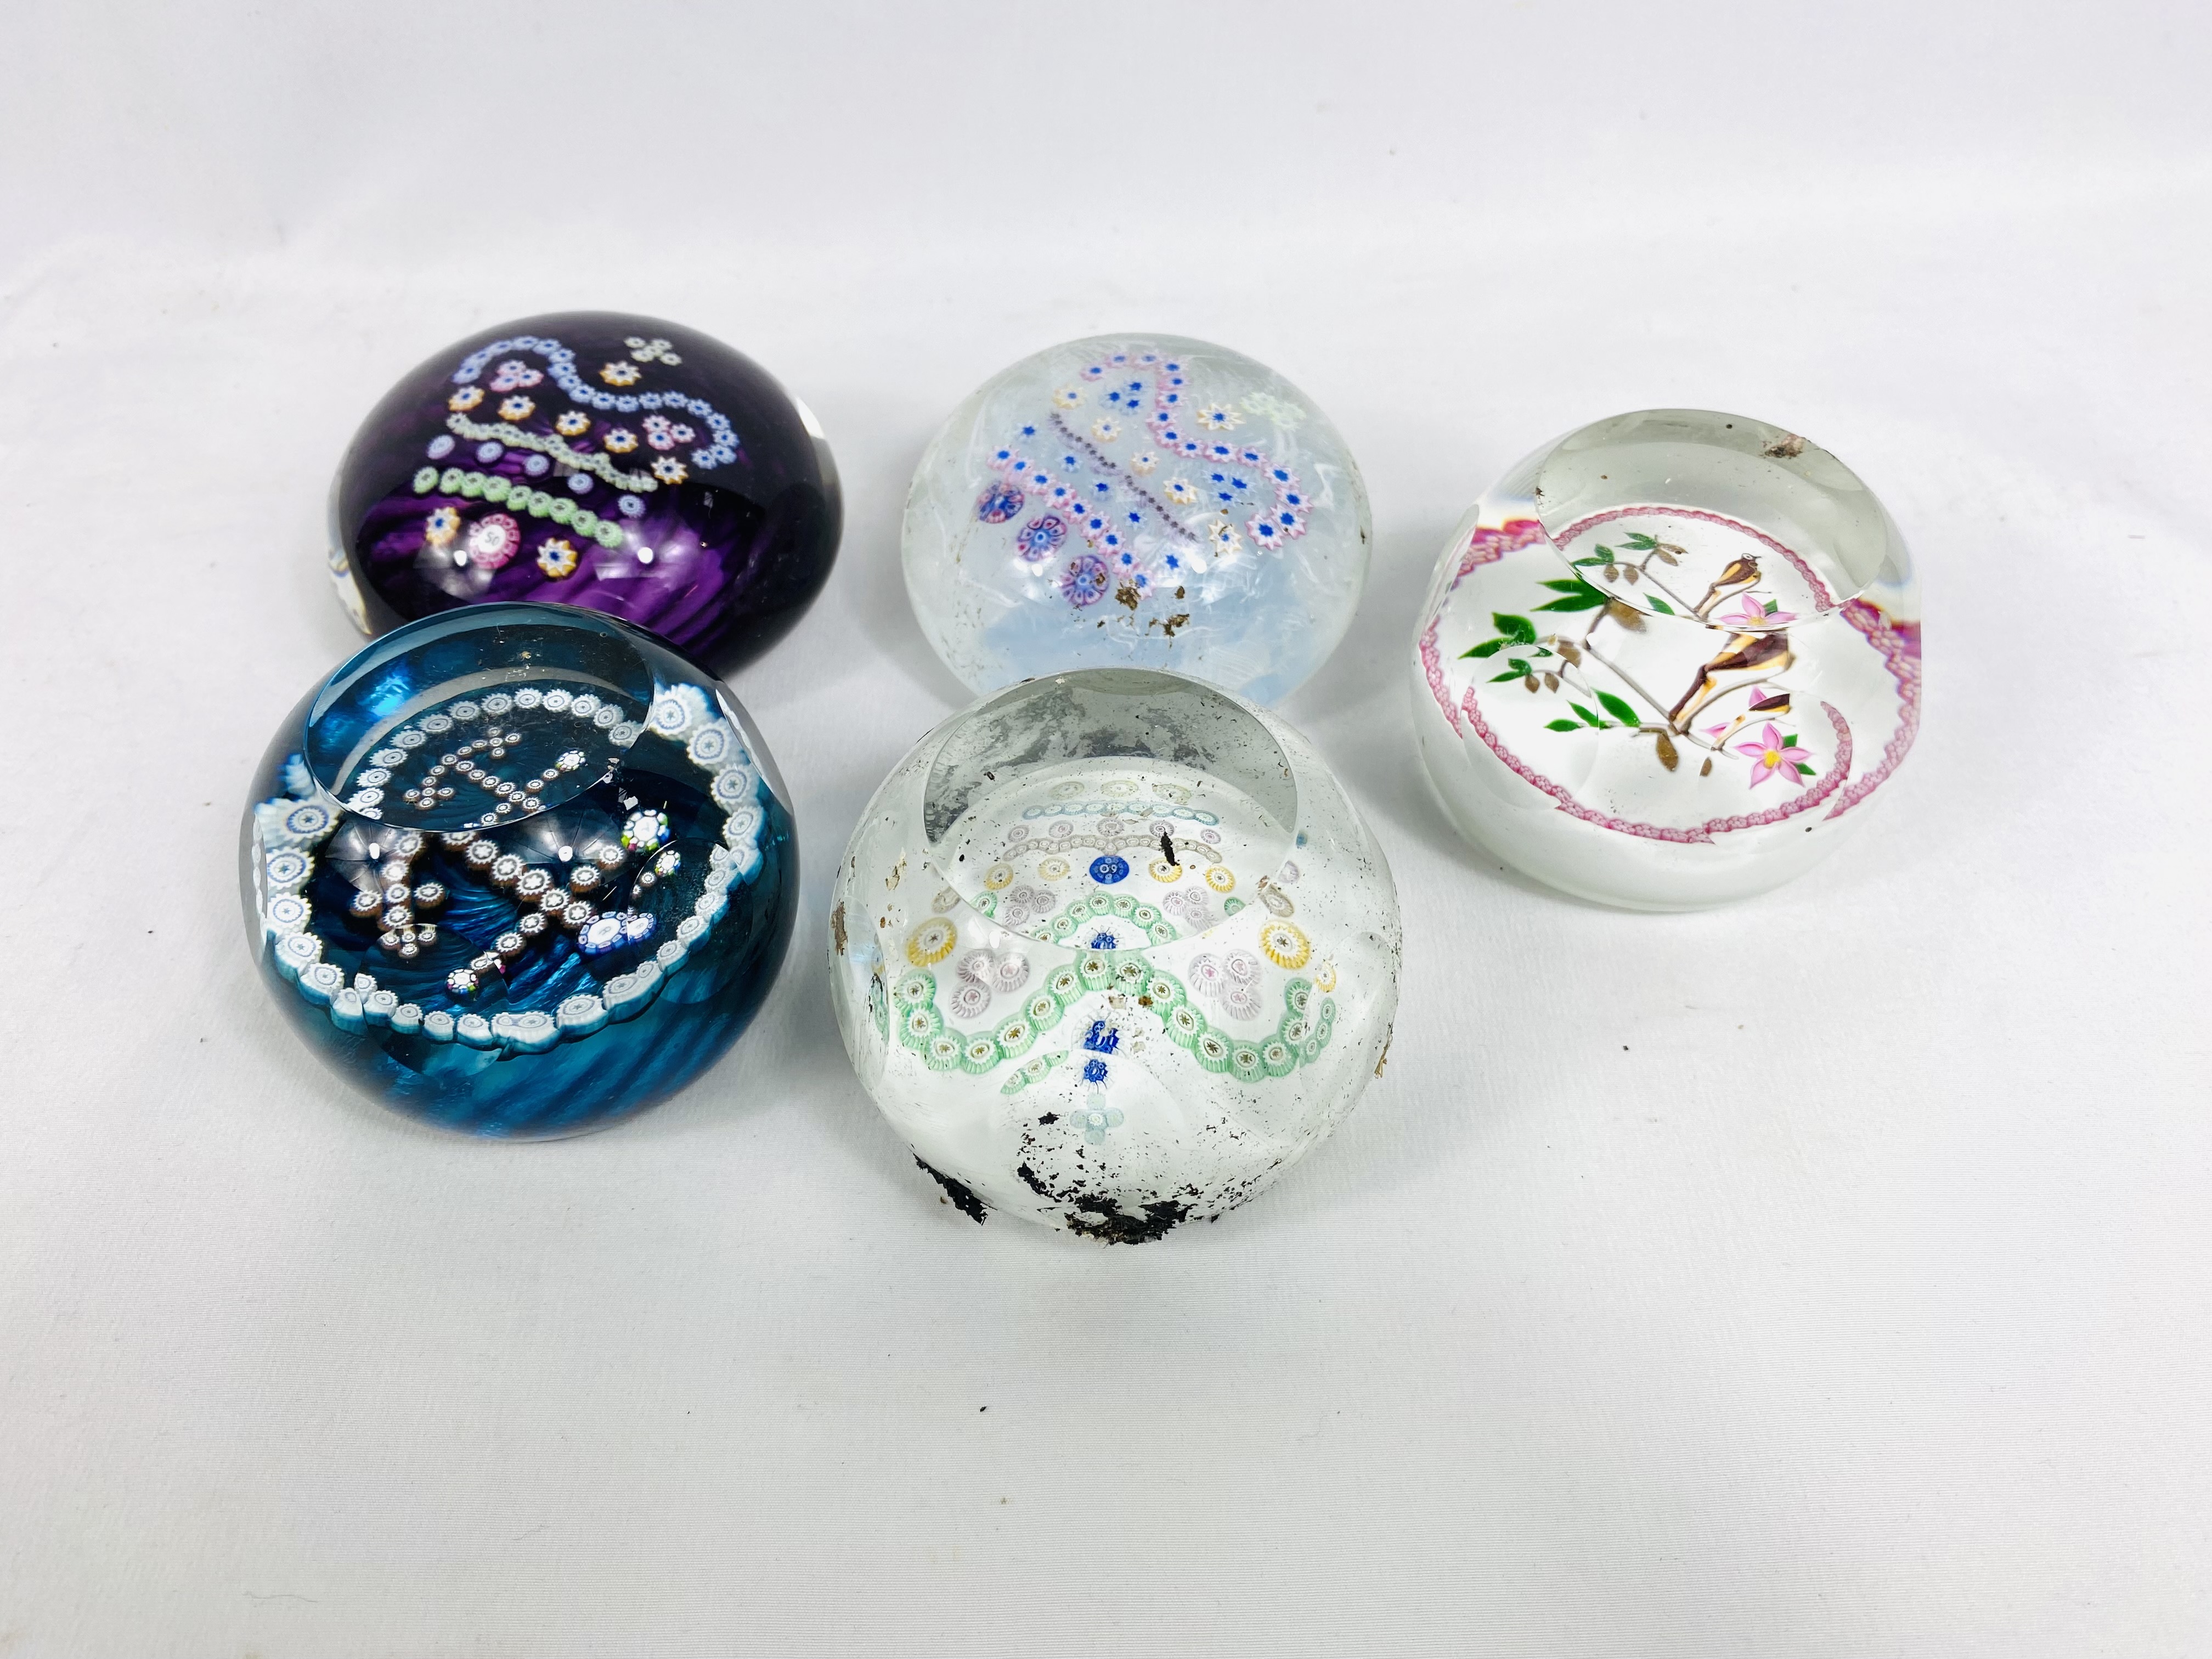 Five Caithness glass paperweights